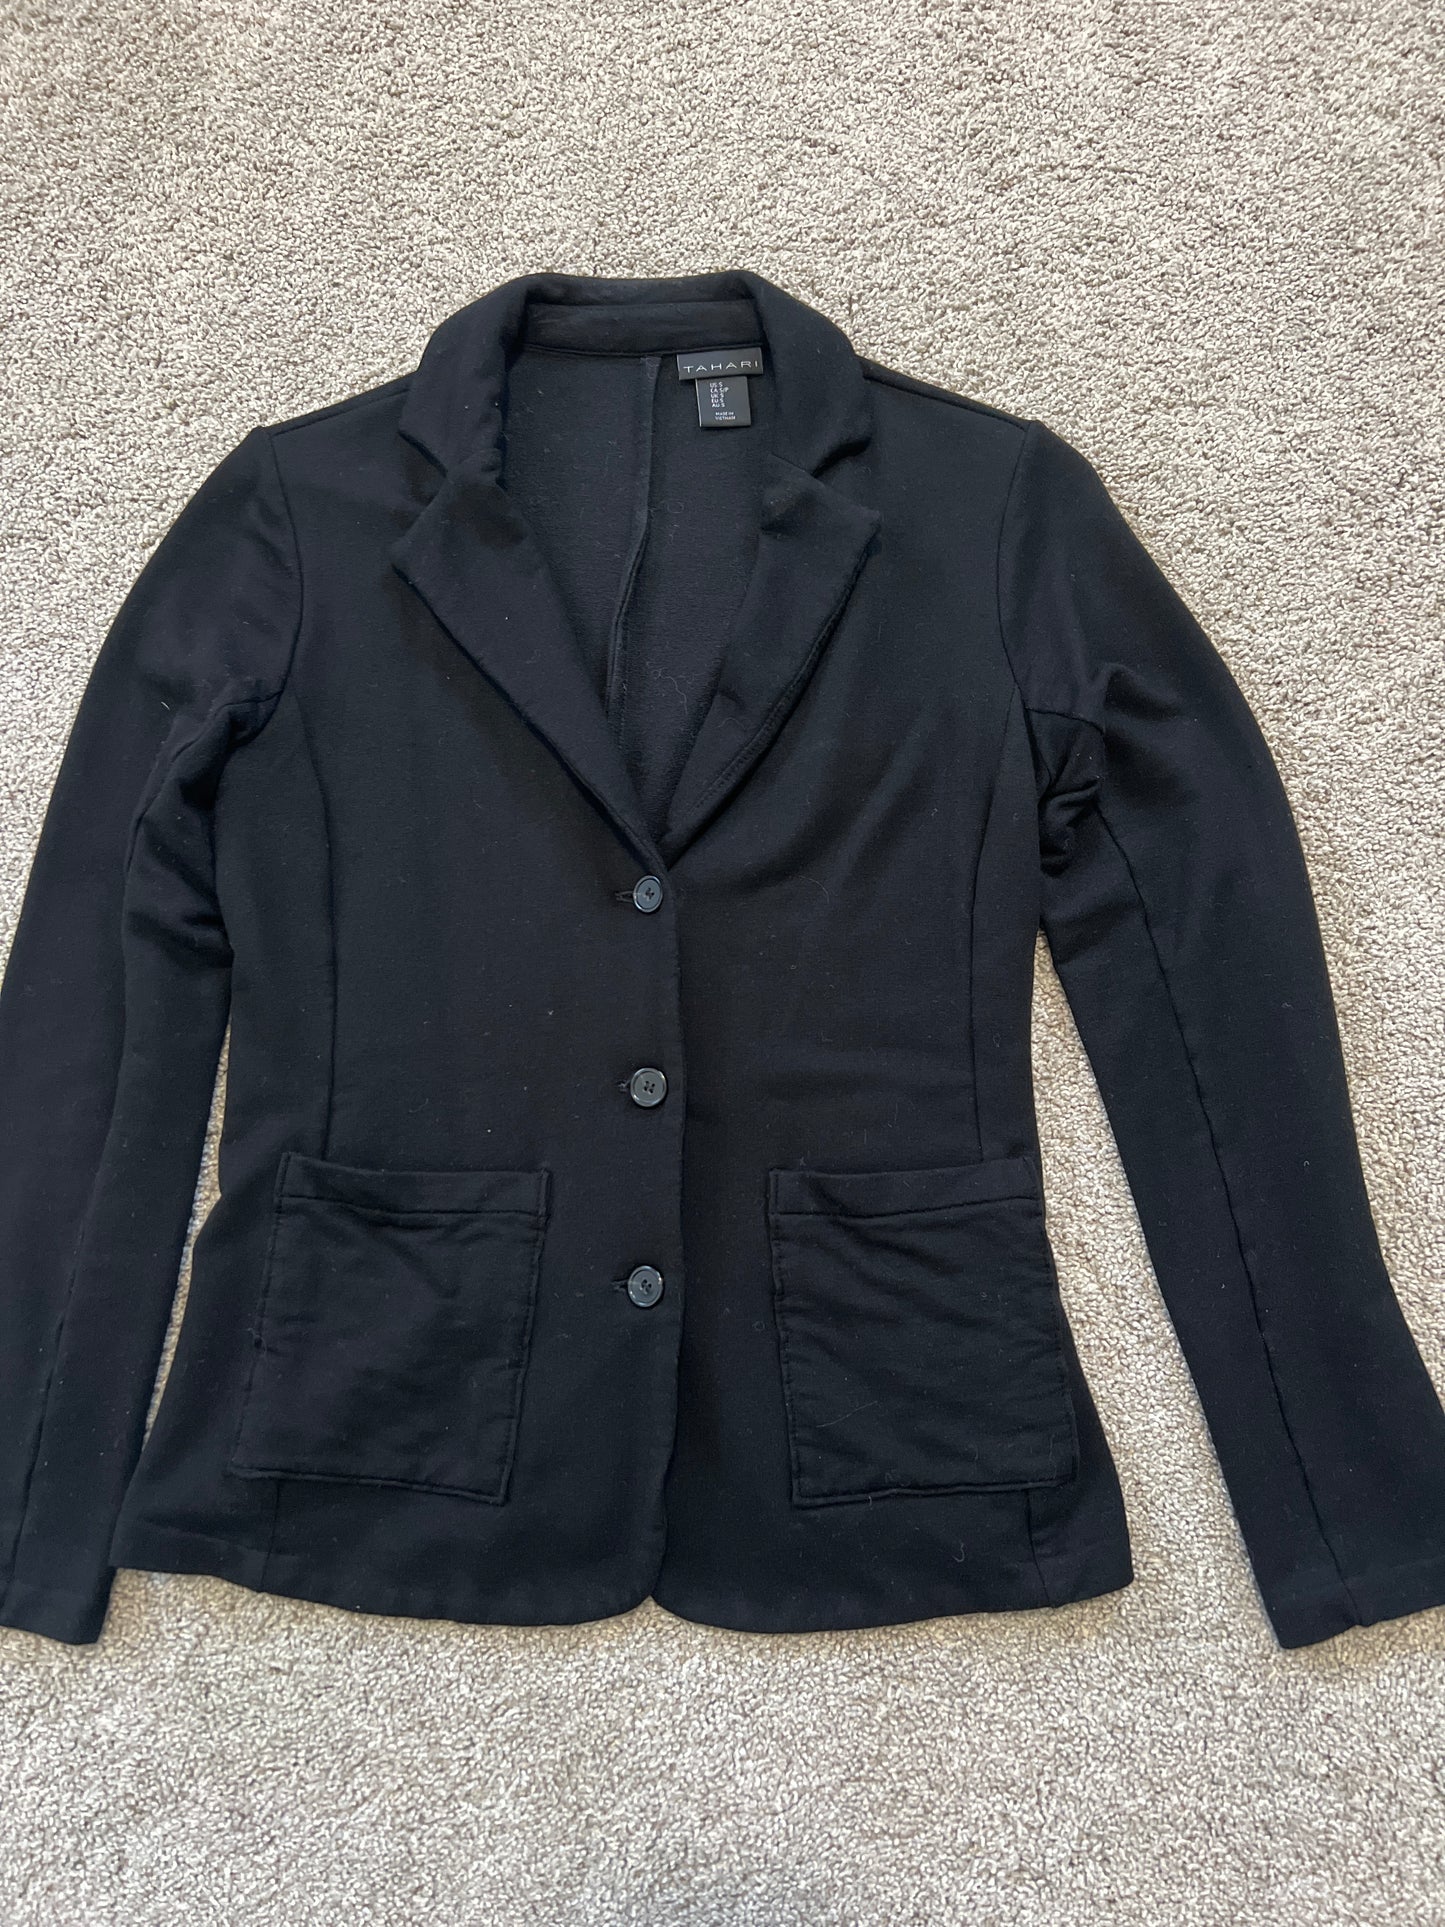 Tahari Sweatshirt Black Blazer Size S